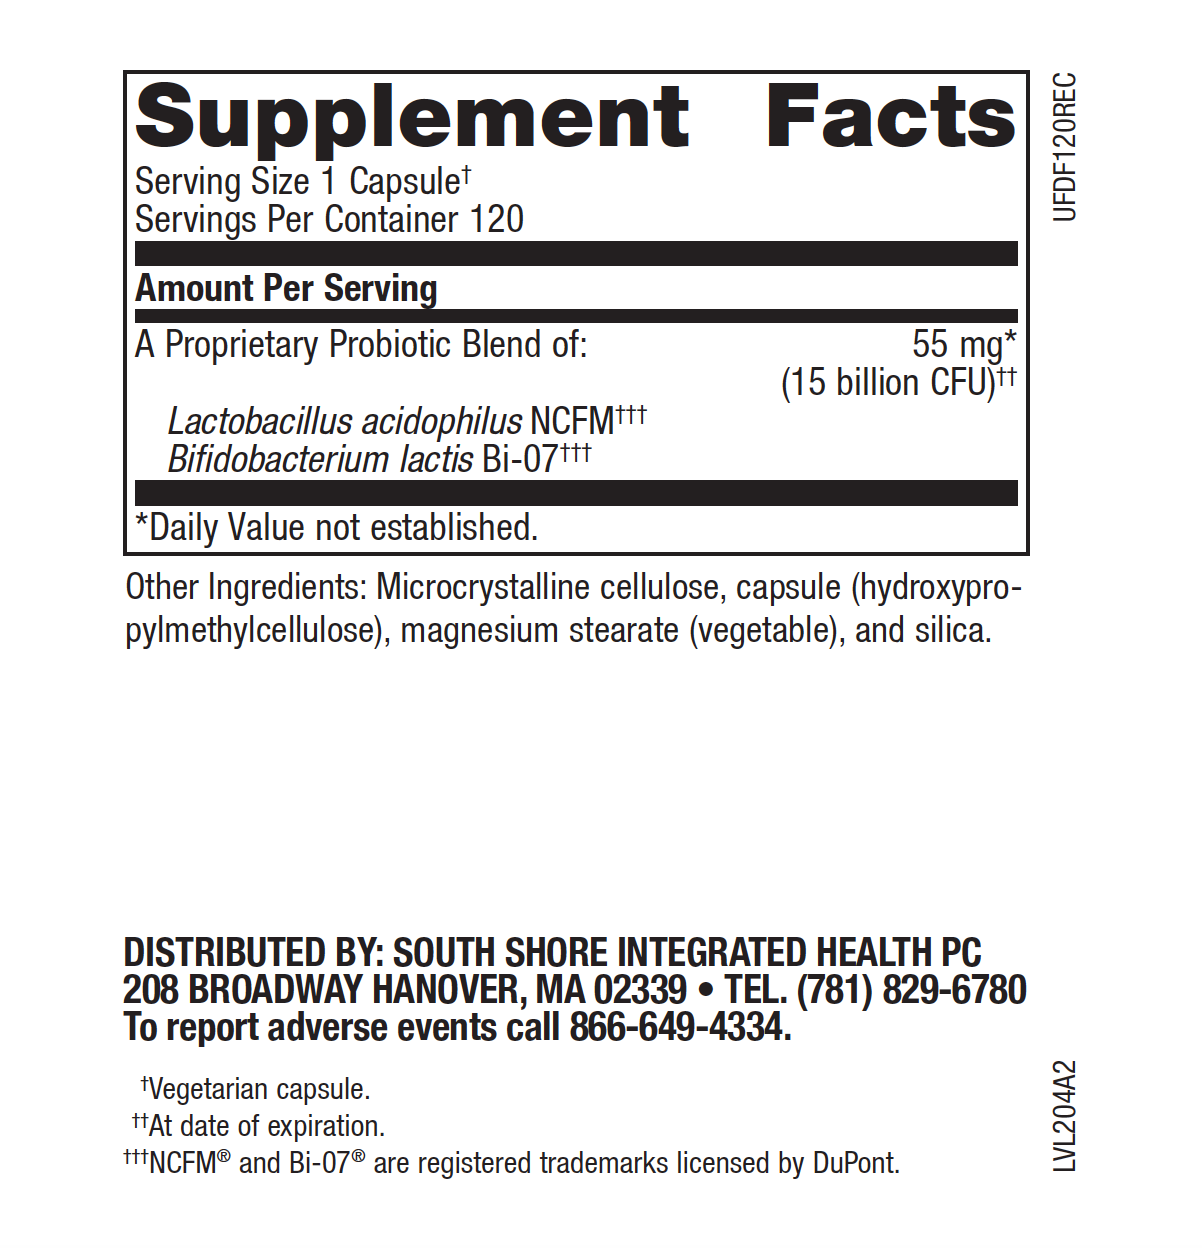 DM essentials Daily Flora 120 capsules bottle supplement facts.